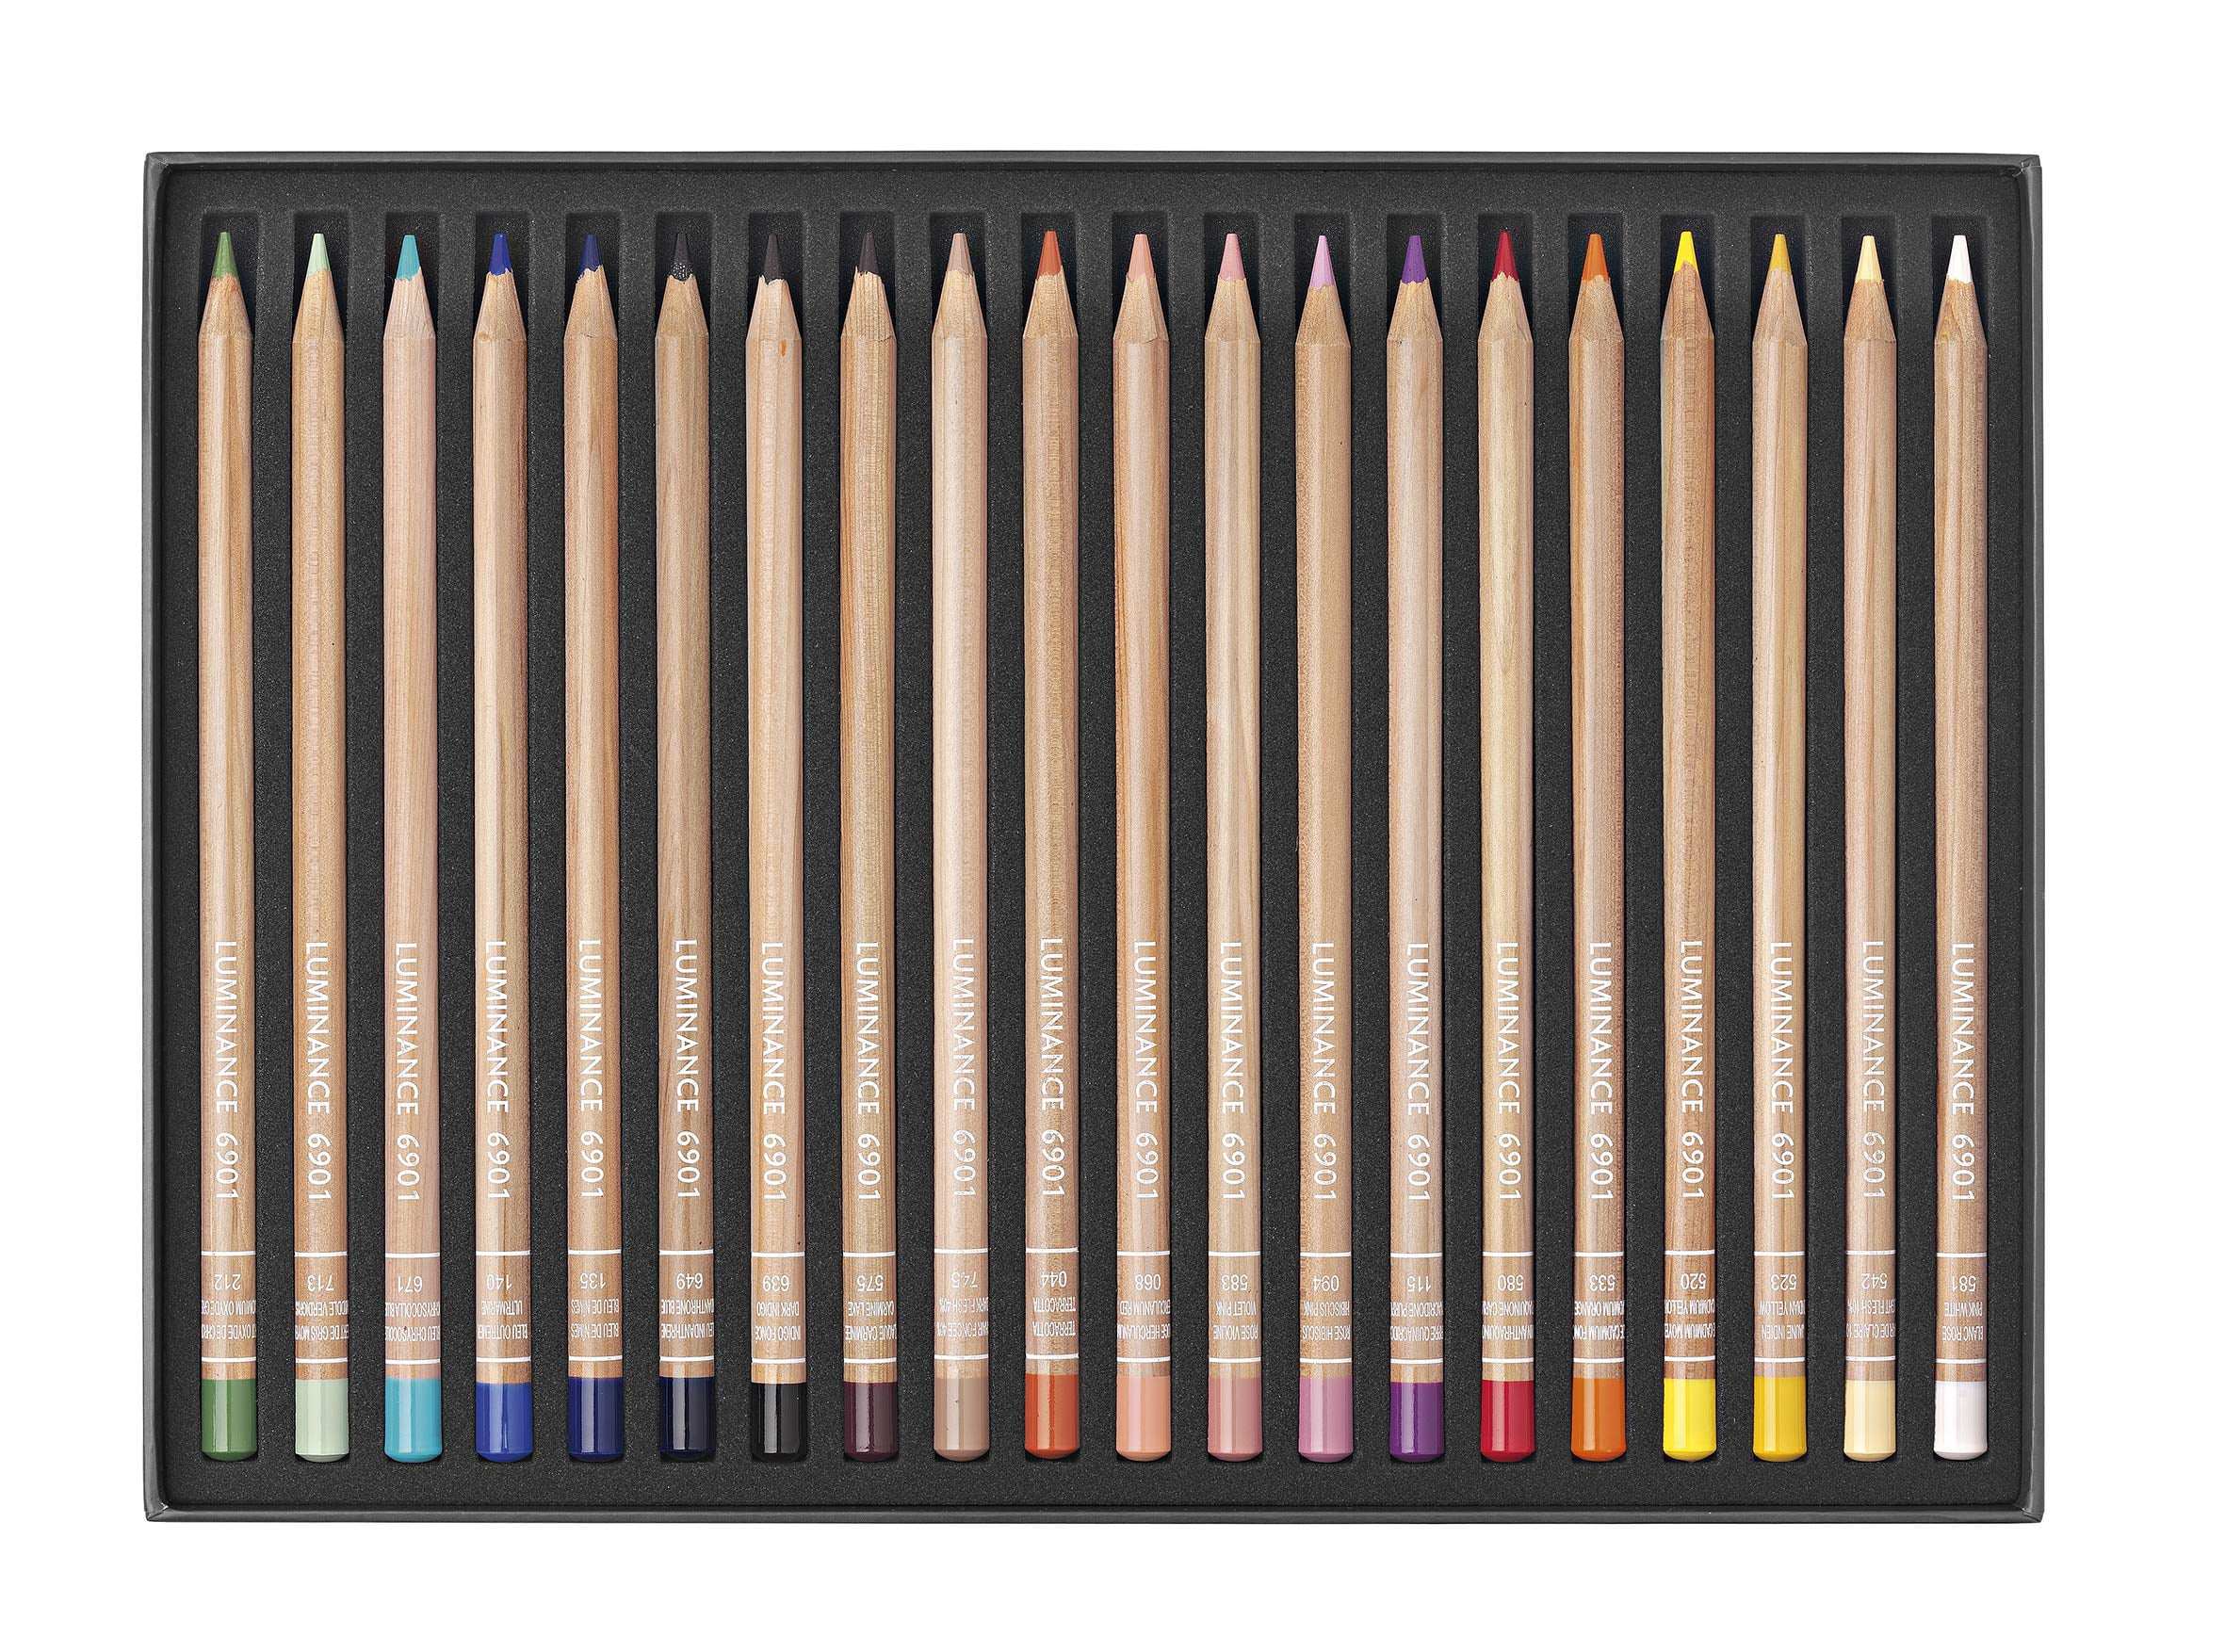 Caran d'Ache Luminance Set of 20, 6901 Colored Pencils